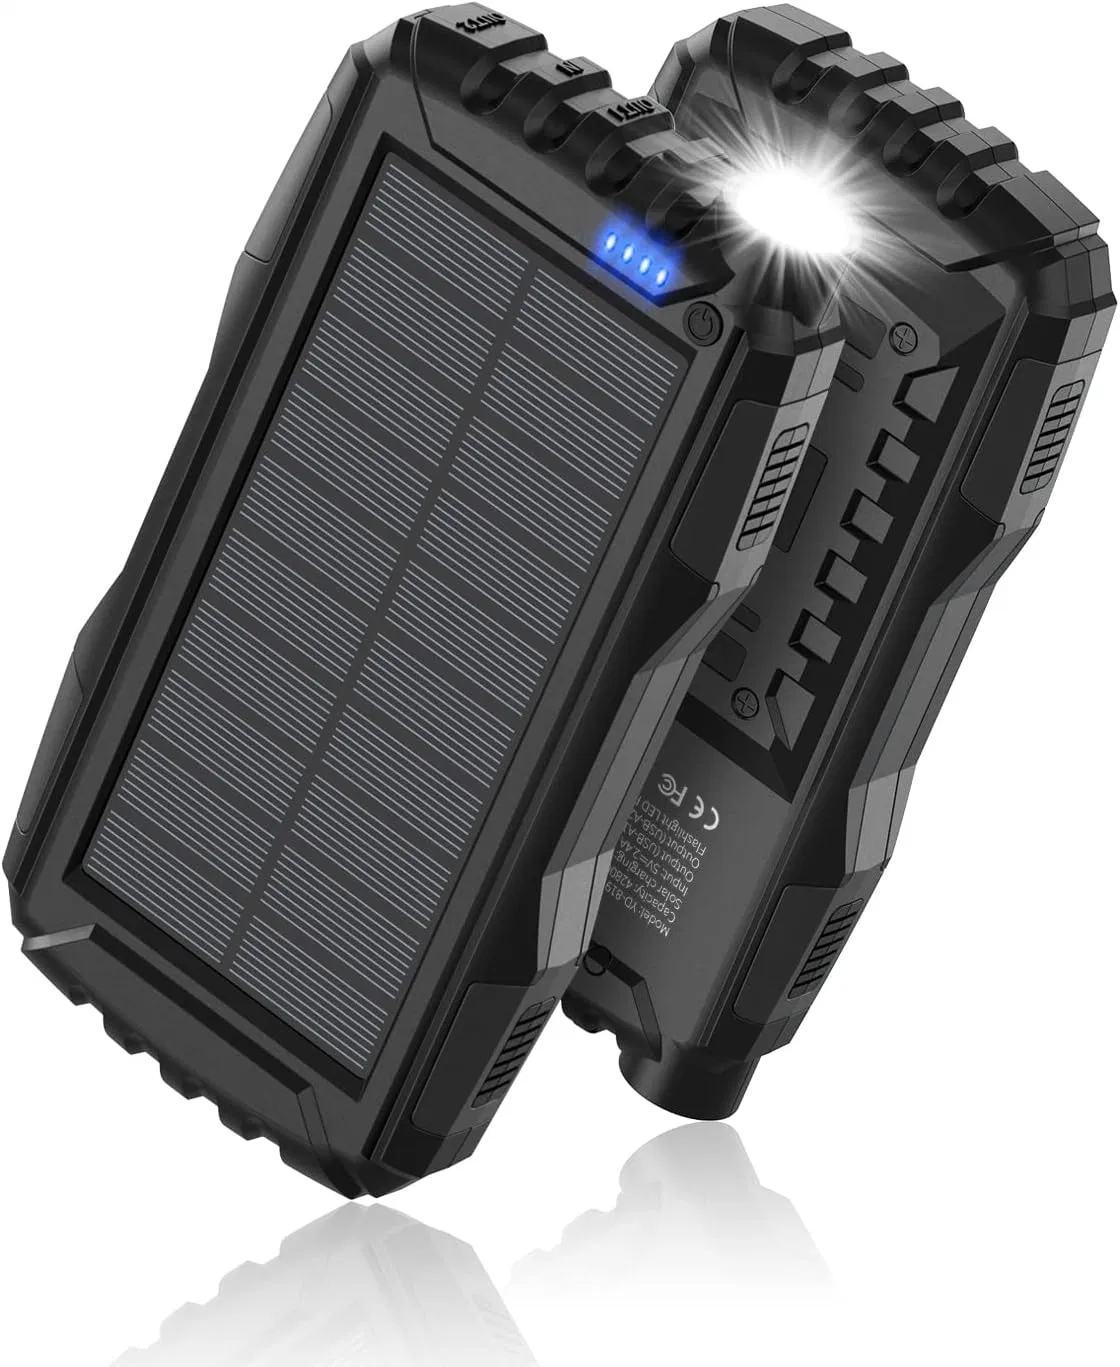 Solar Charger Power Bank Portable External Battery Pack